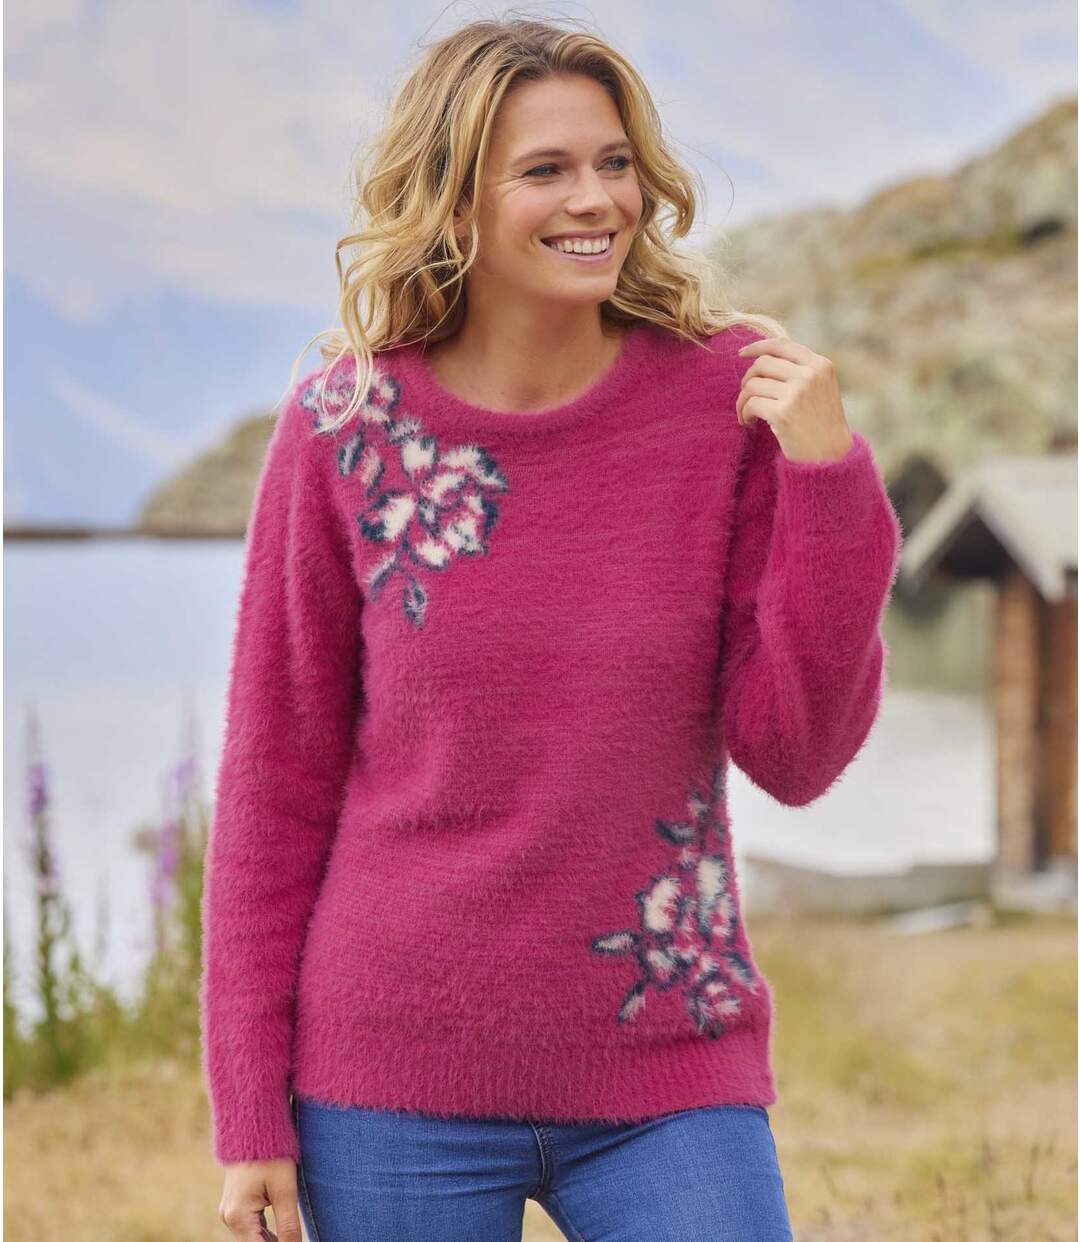 Chlpatý pletený sveter s kvetinami Atlas For Men